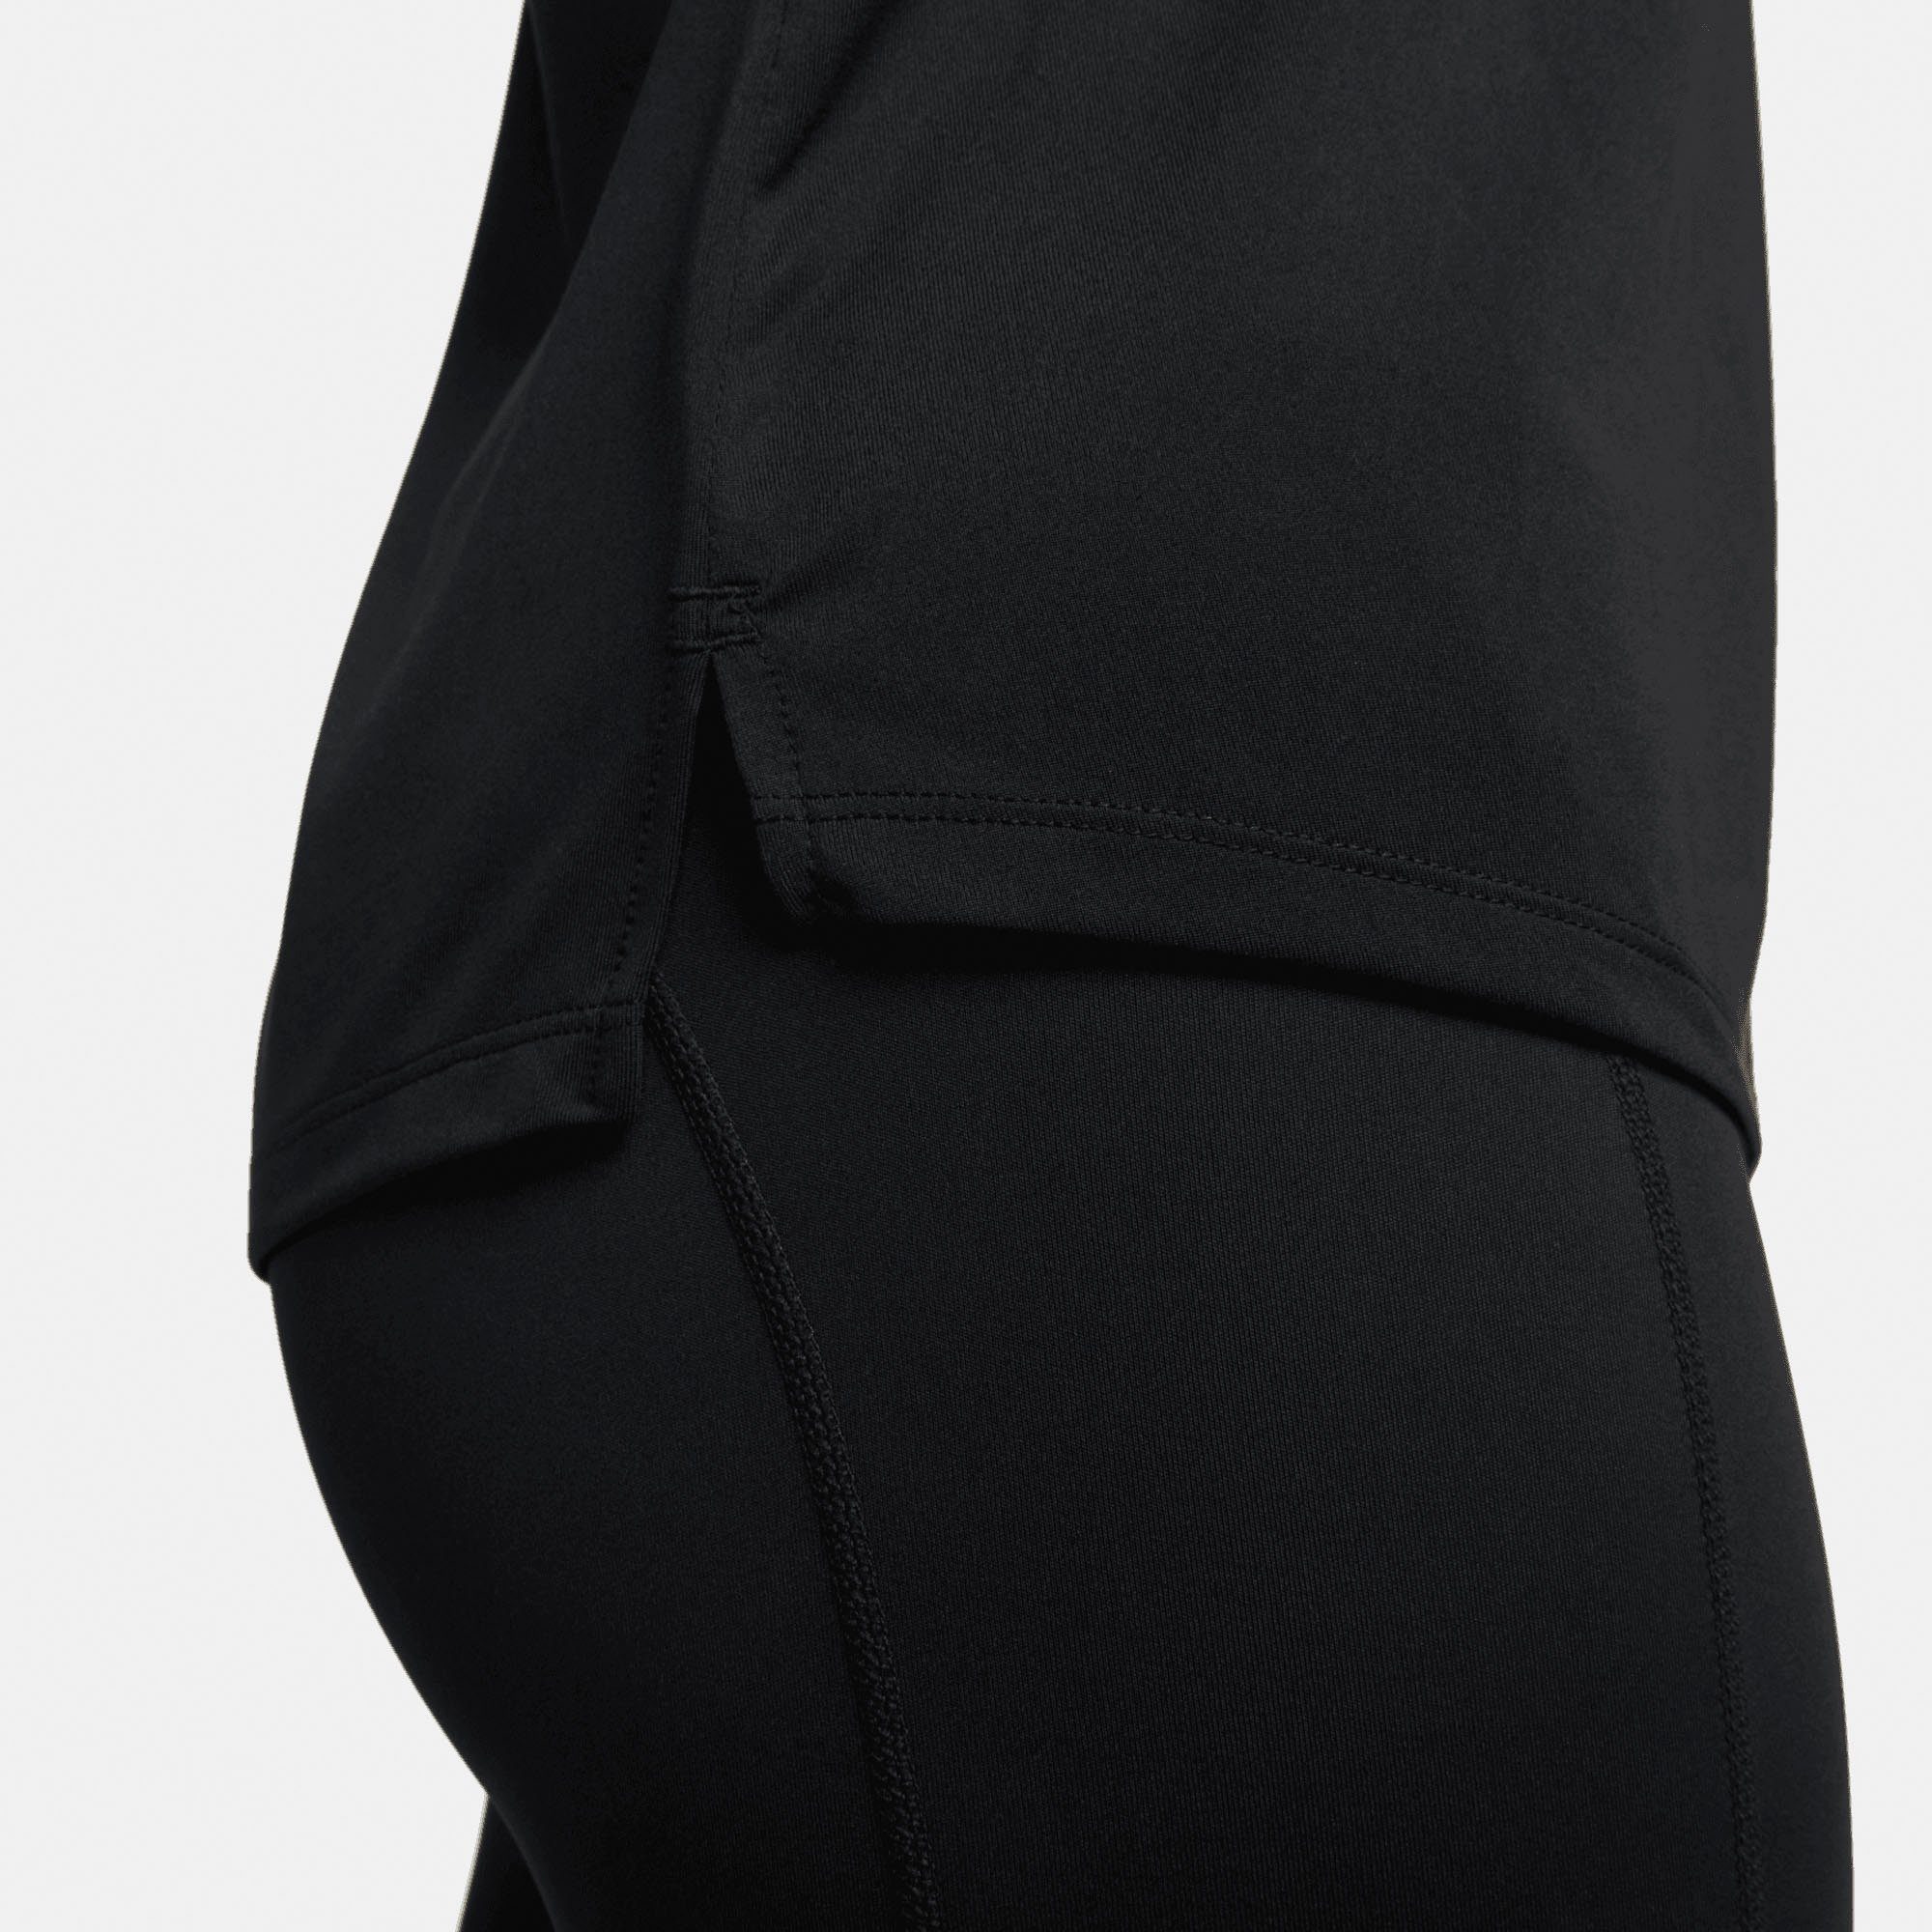 Nike Laufshirt One Dri-FIT Swoosh Short-Sleeved Top BLACK Women's